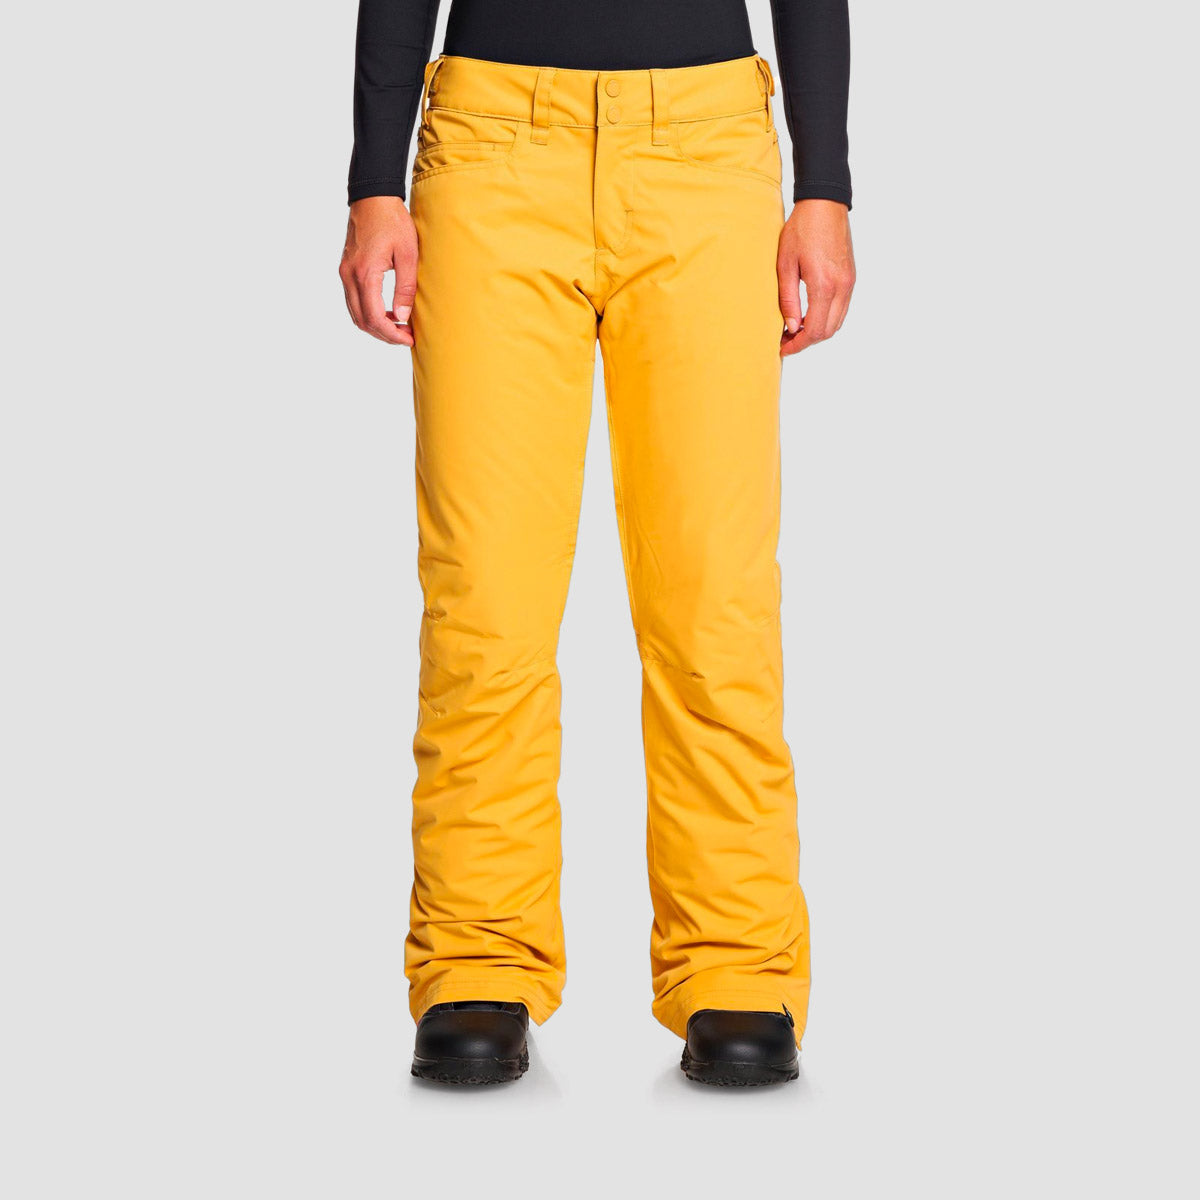 Roxy Backyard Snow Pants Spruce Yellow - Womens